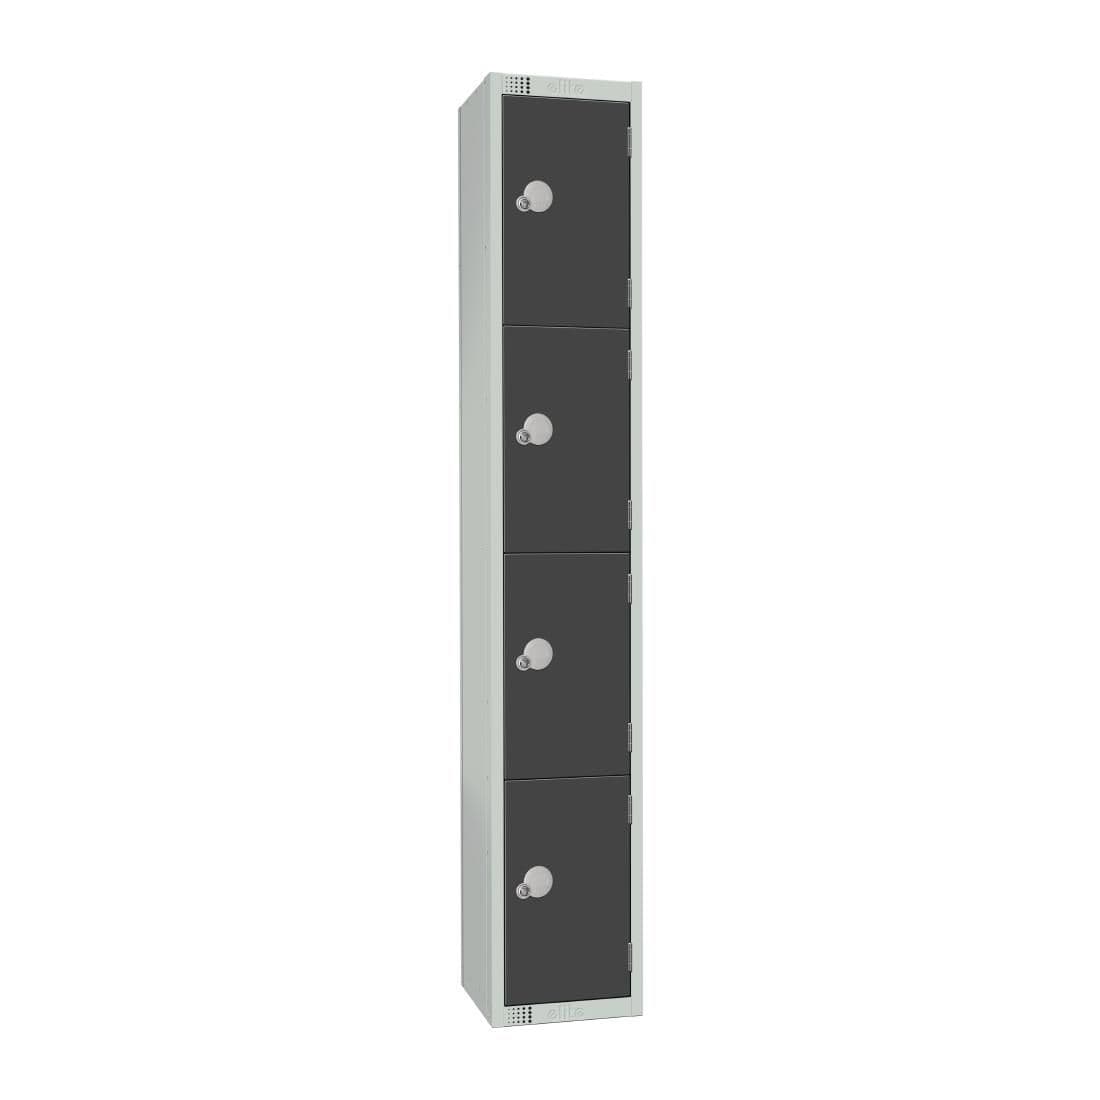 GR680-CL Elite Four Door Manual Combination Locker Locker Graphite Grey JD Catering Equipment Solutions Ltd